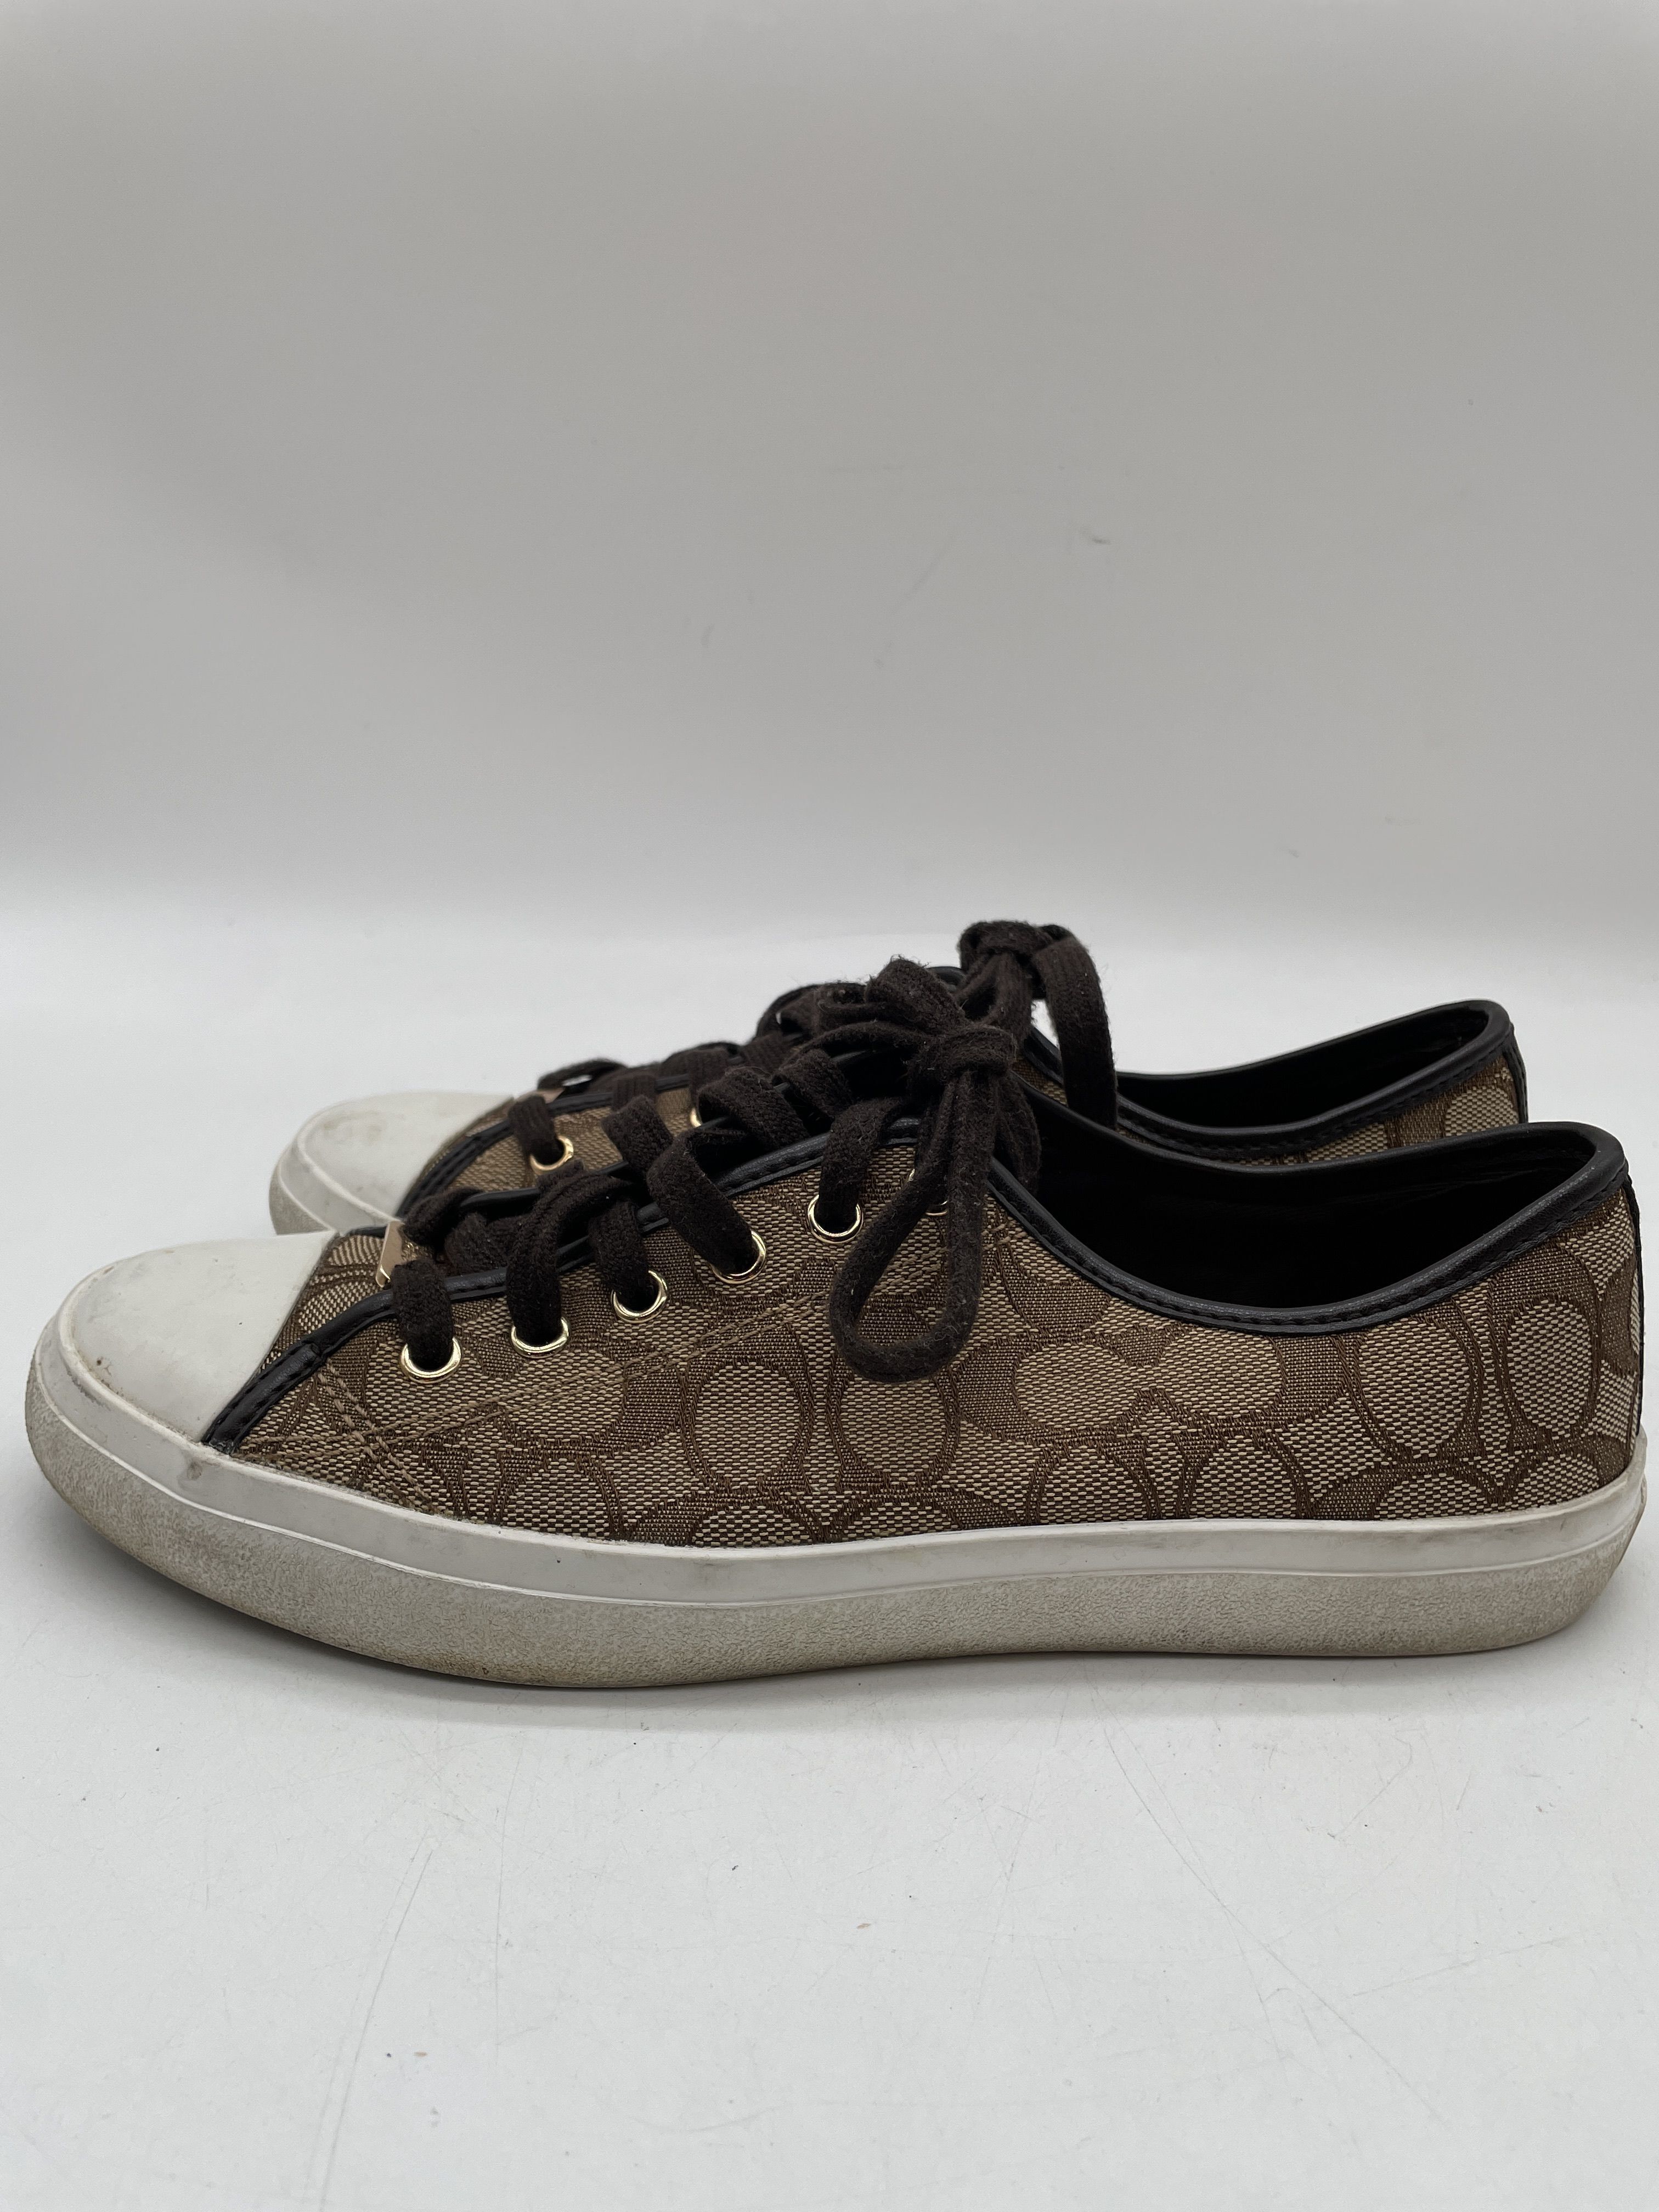 Coach Burgundy Leather Empire Zipper Sneakers Size 7 $50 | eBay